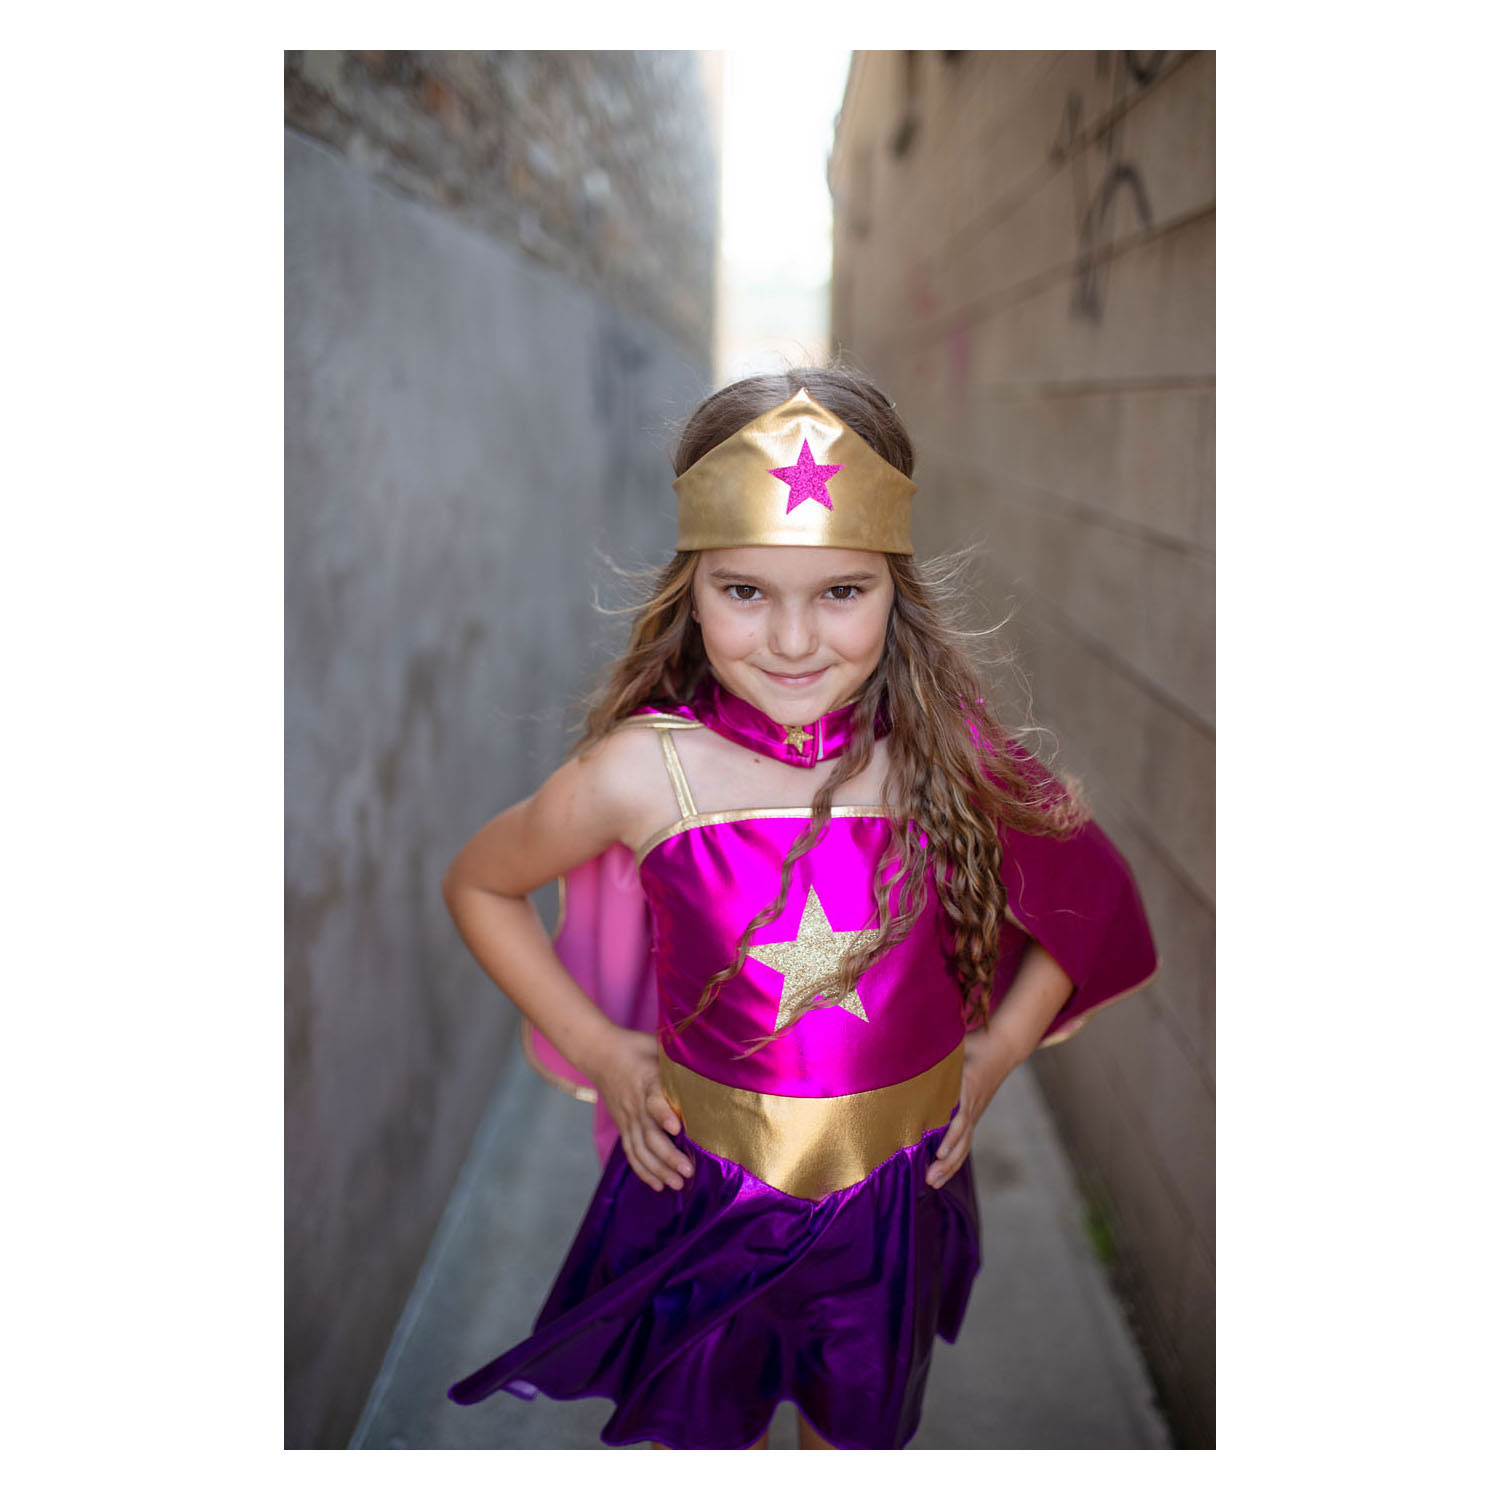 Robe de costume de super-héros, 4-6 ans